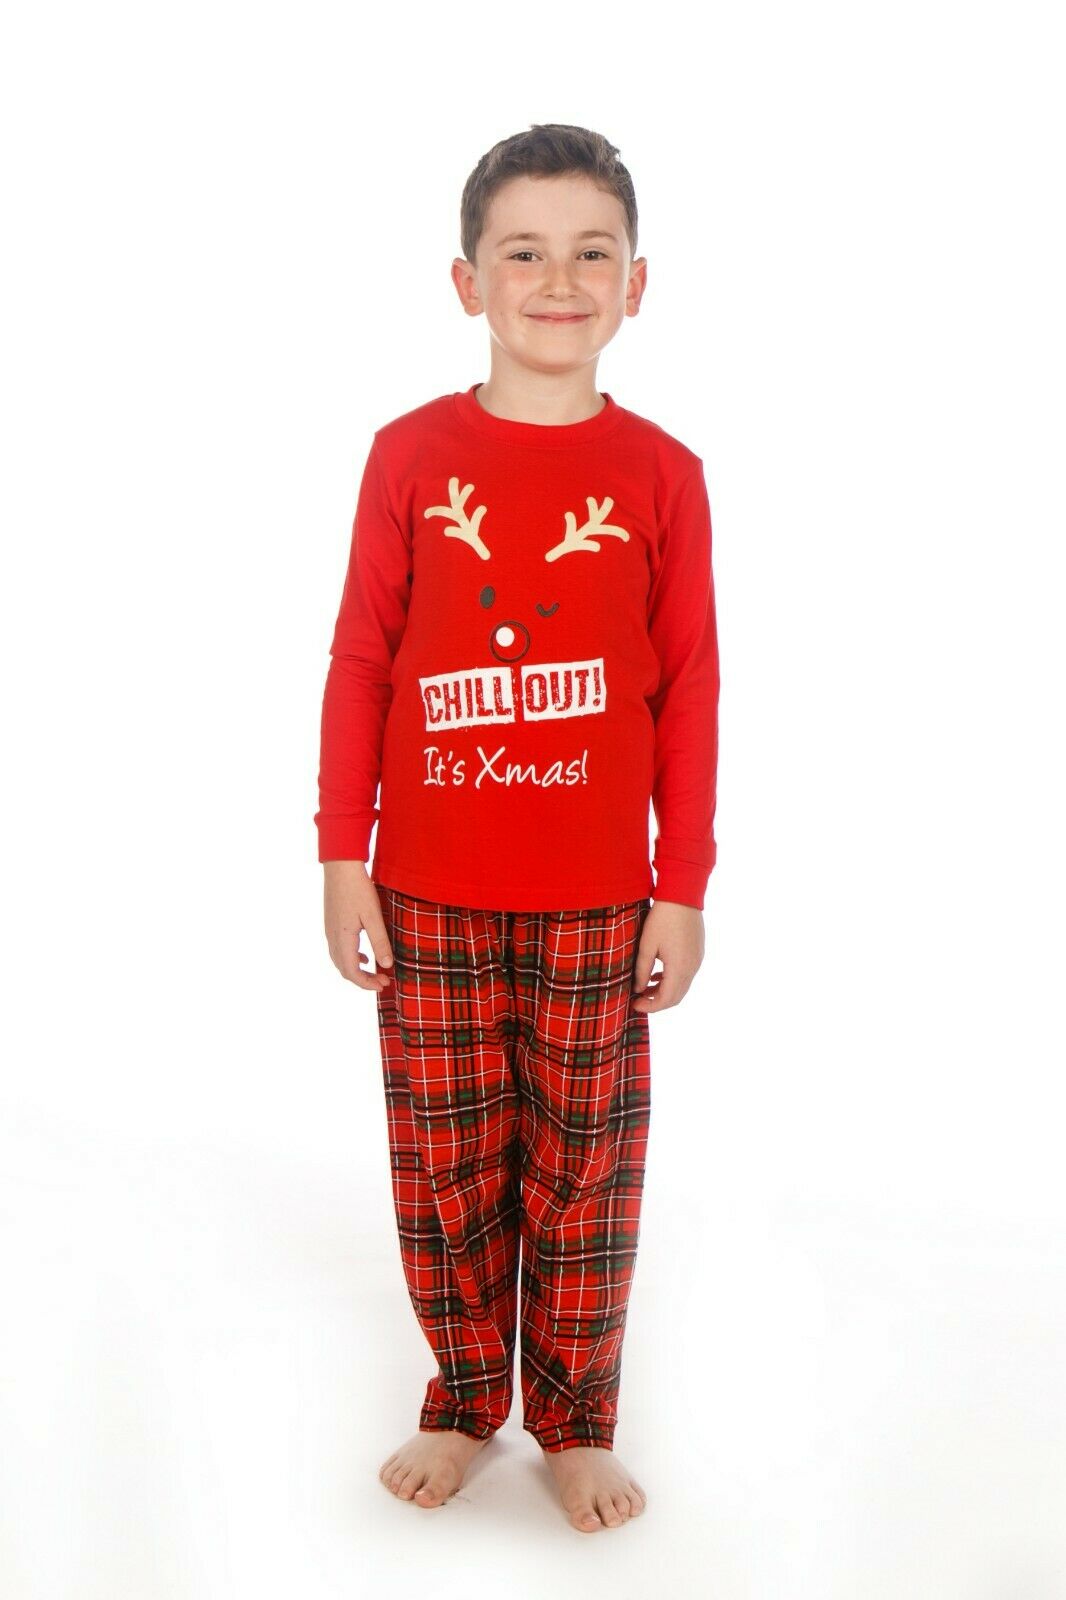 Family Matching Christmas Pyjamas - Chill